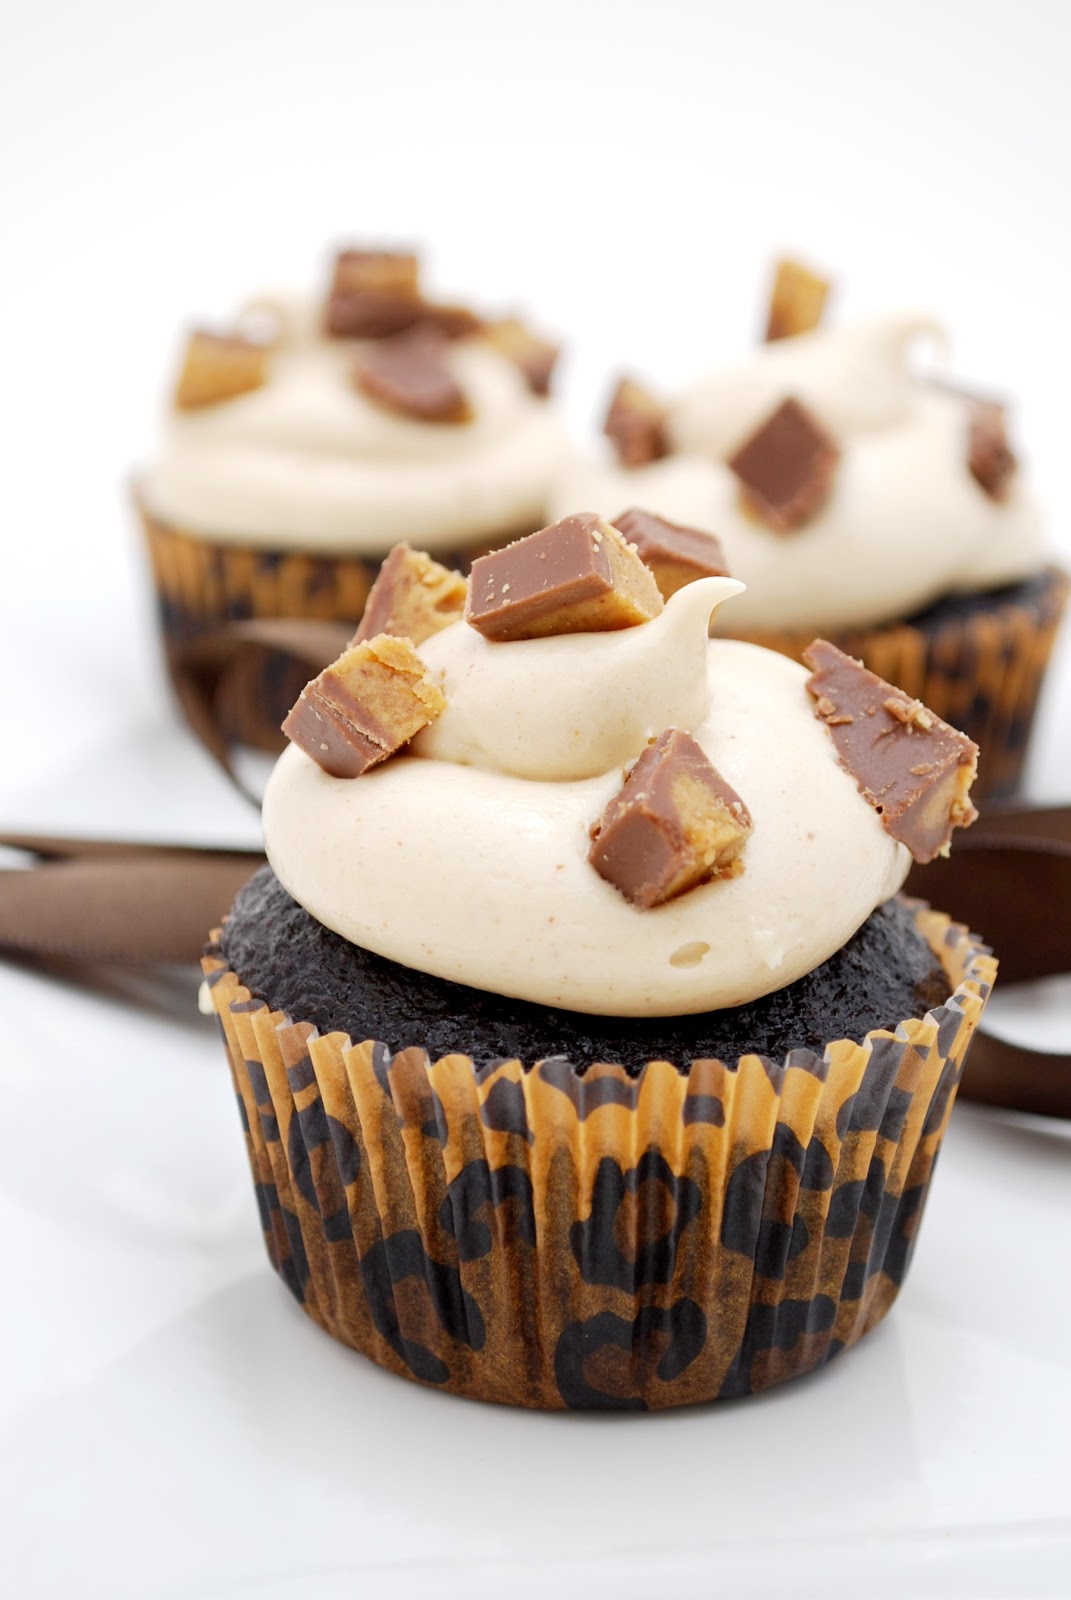 chocolate cupcakes recipe chocolate peanut butter cupcakes makes 20 24 cupcakes ingredients